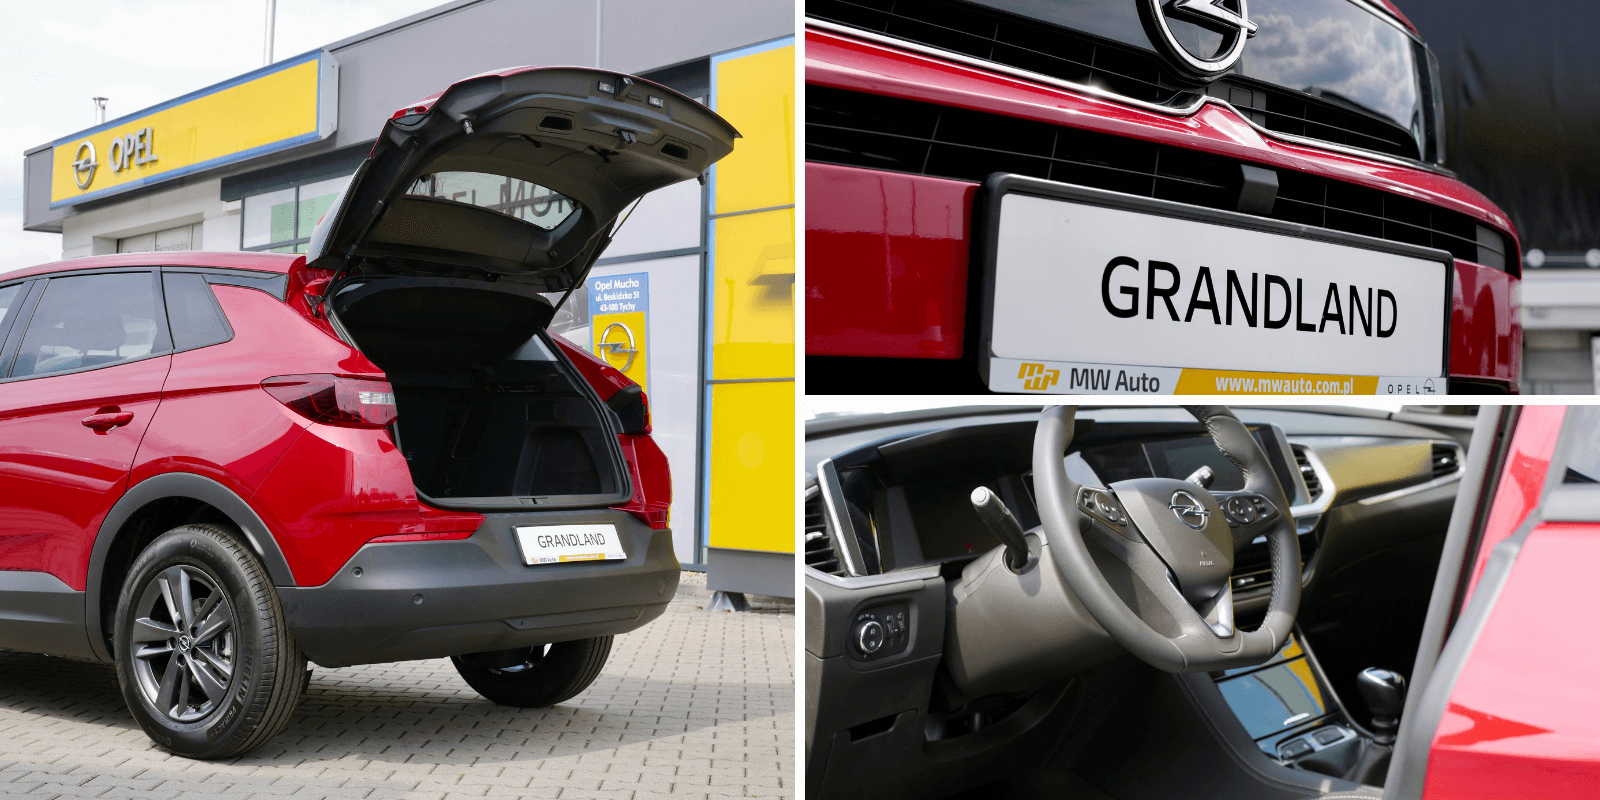 Opel Grandland MW Auto